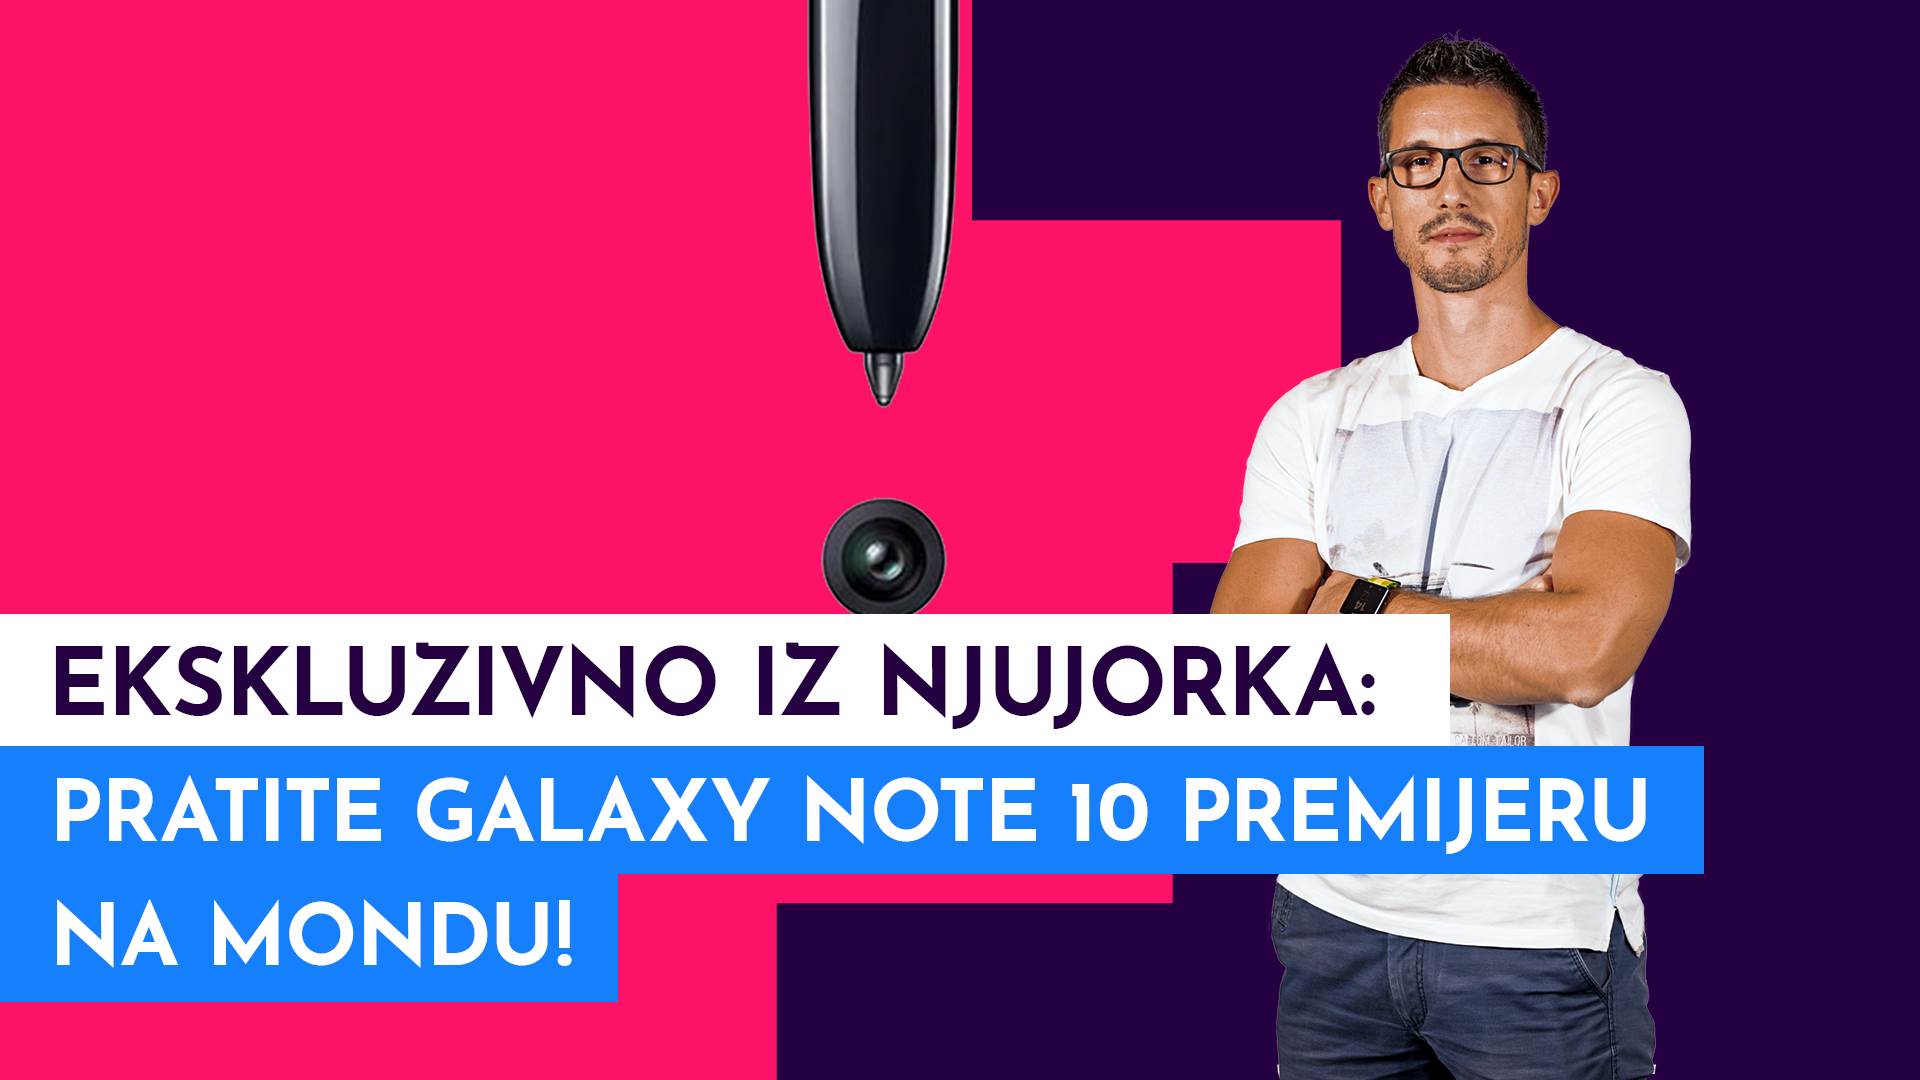  Samsung-Galaxy-Note-10-premijera-Njujork-Galaxy-Note-10-cena-prodaja-kupovina 